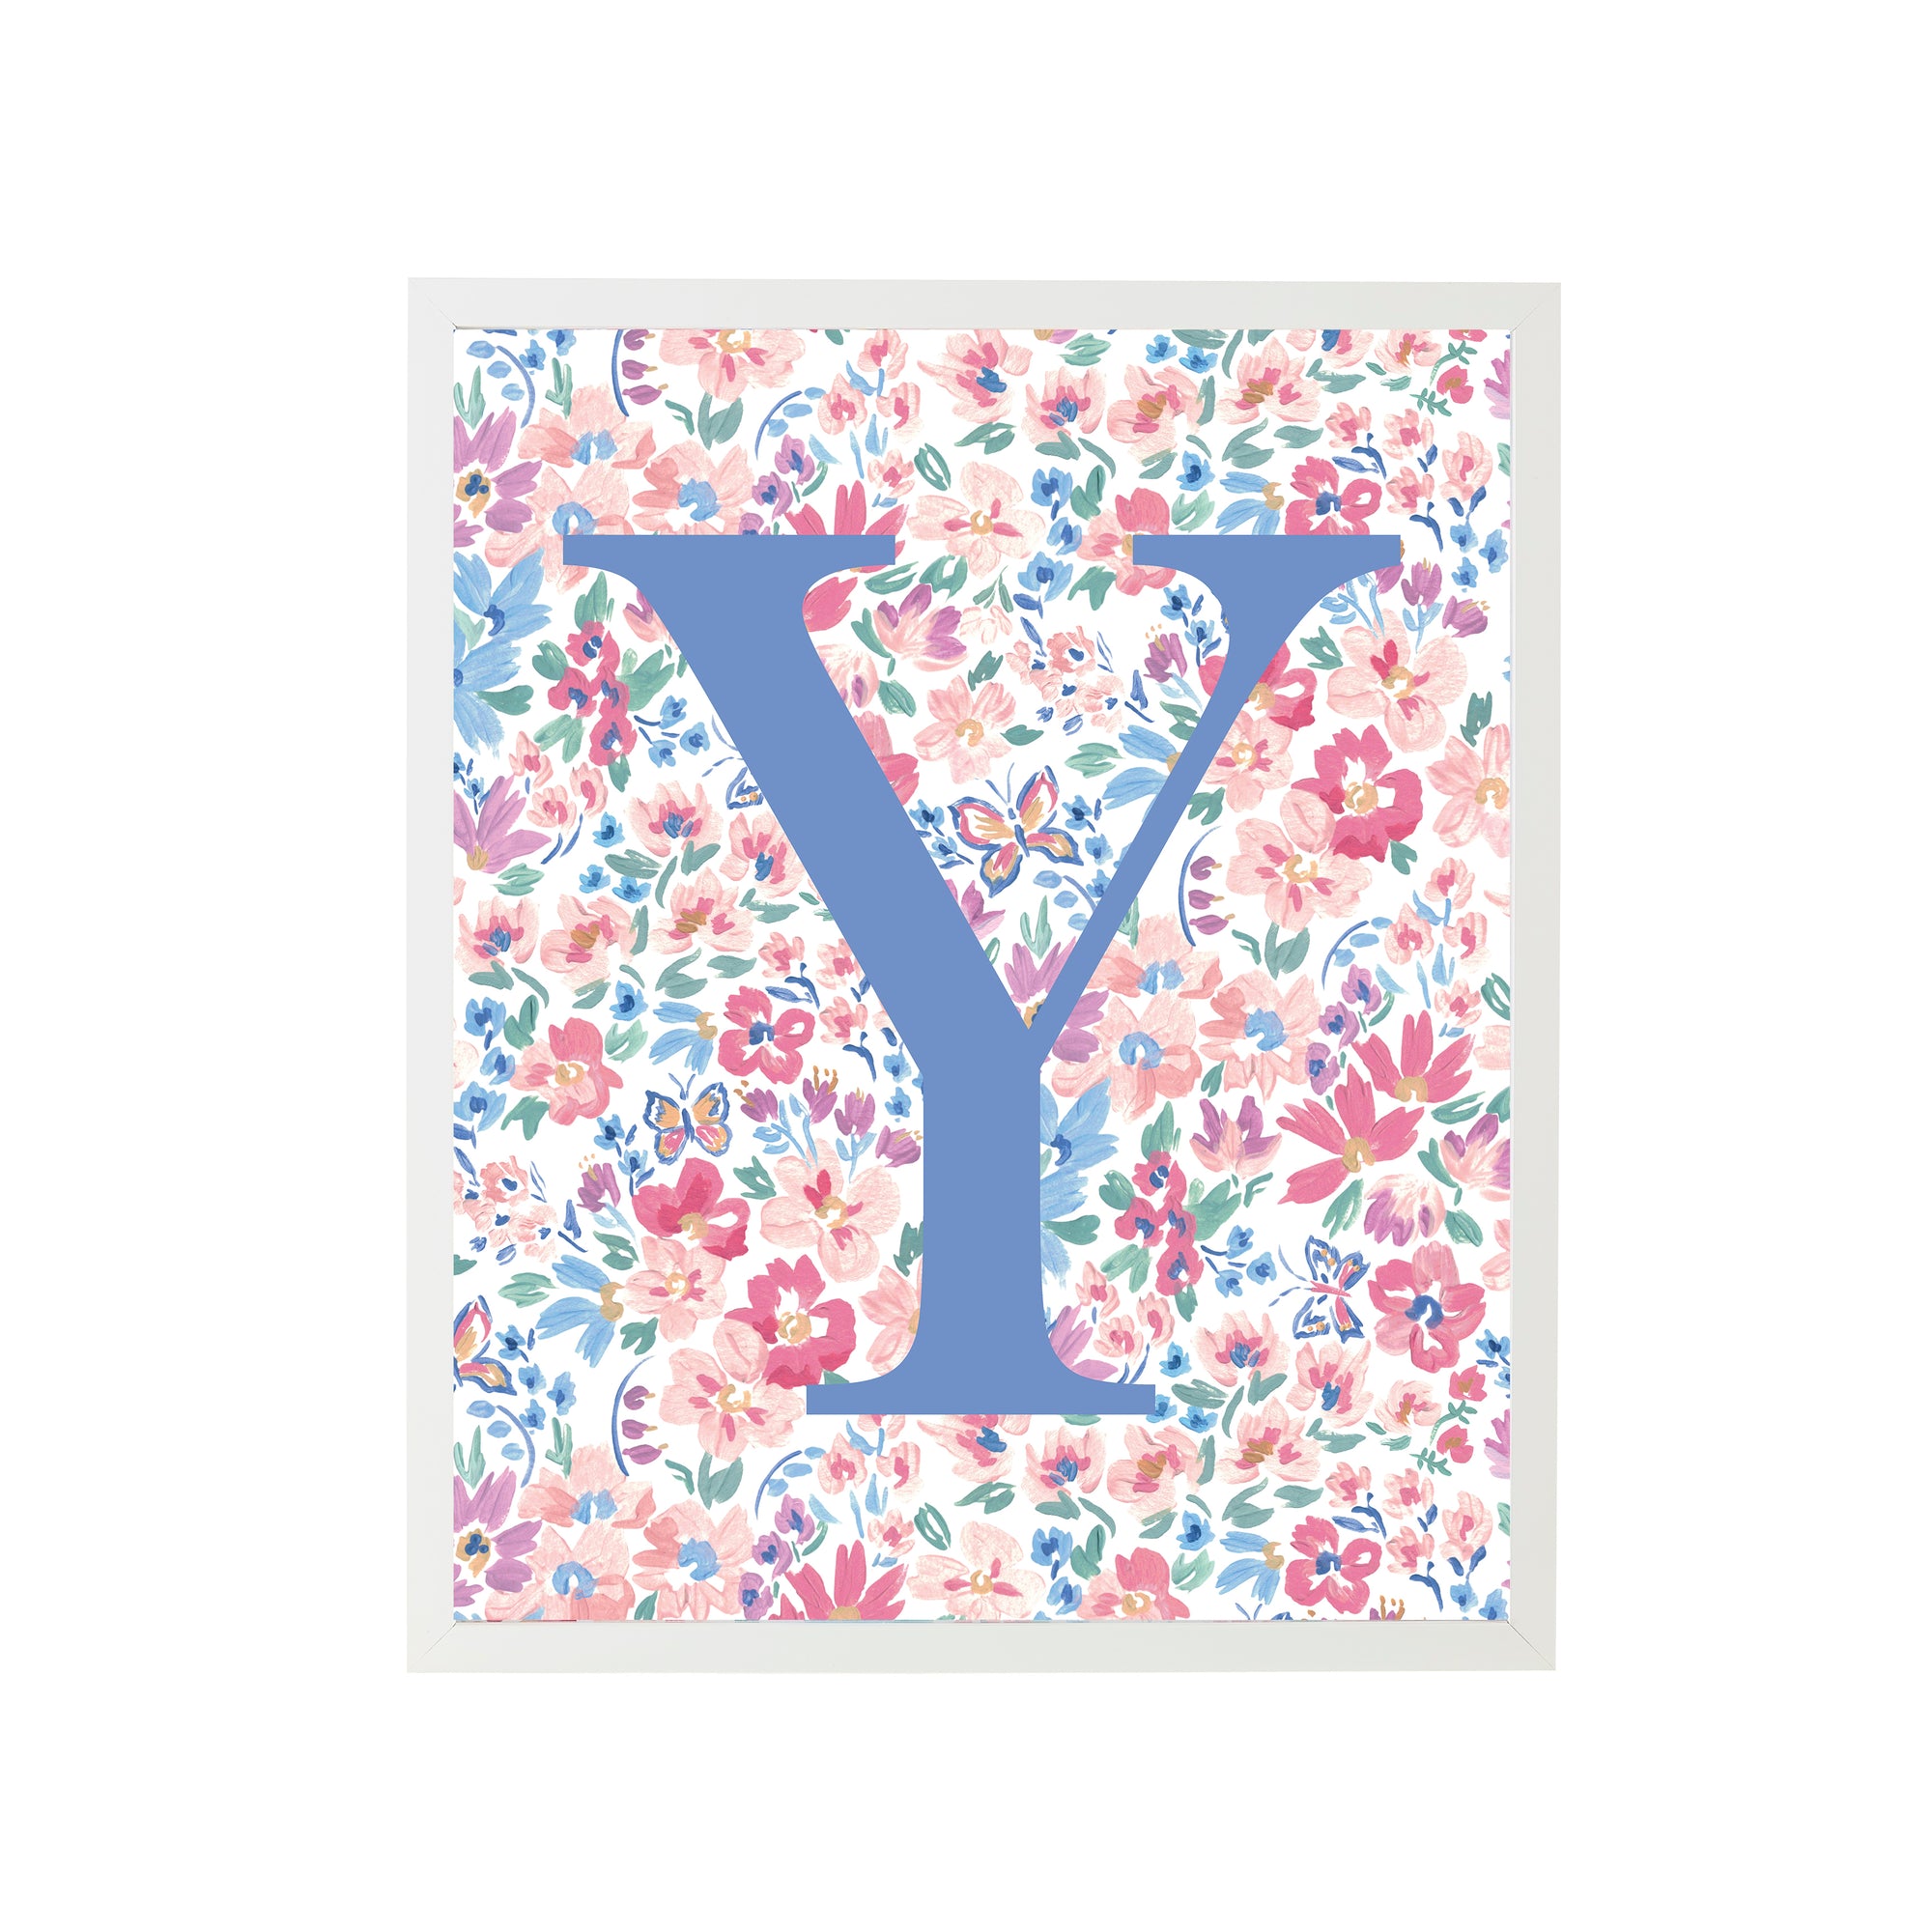 Framed "Y" Butterfly Garden Letter Print